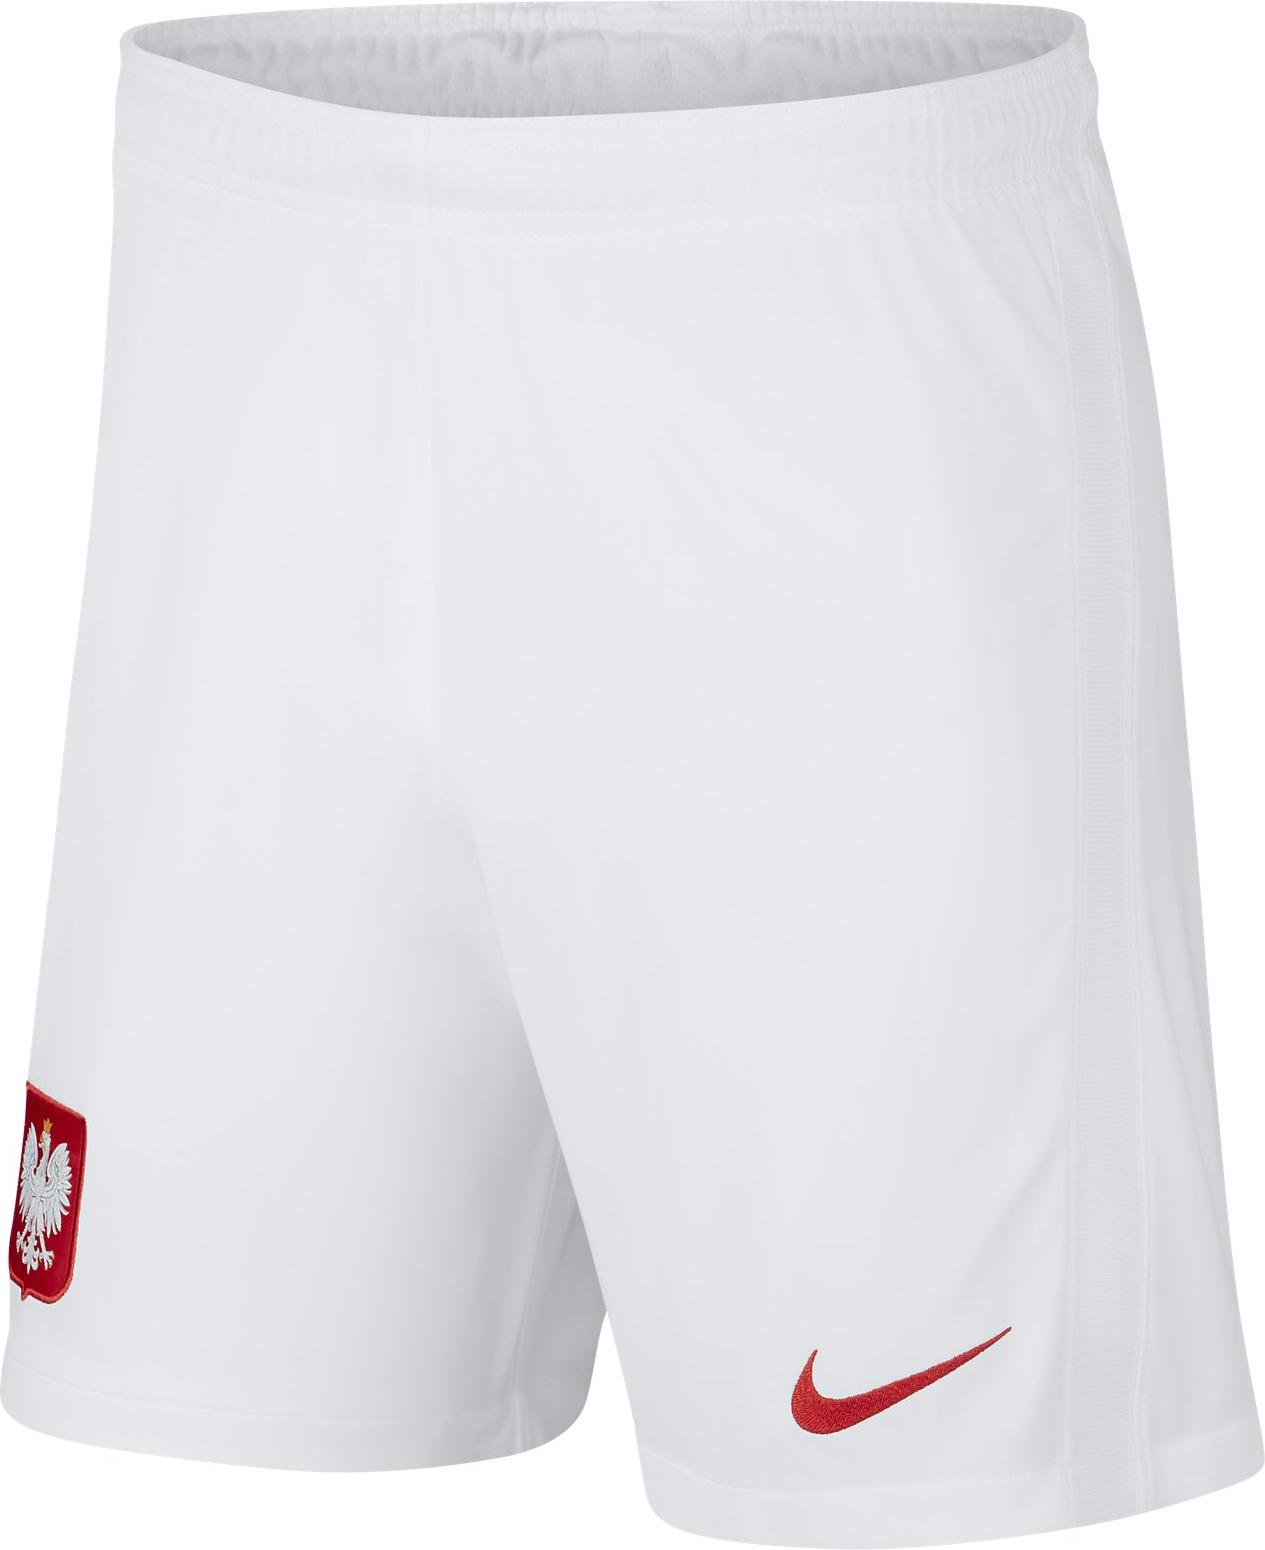 Pantalón corto Nike Poland 2020 Stadium Home/Away